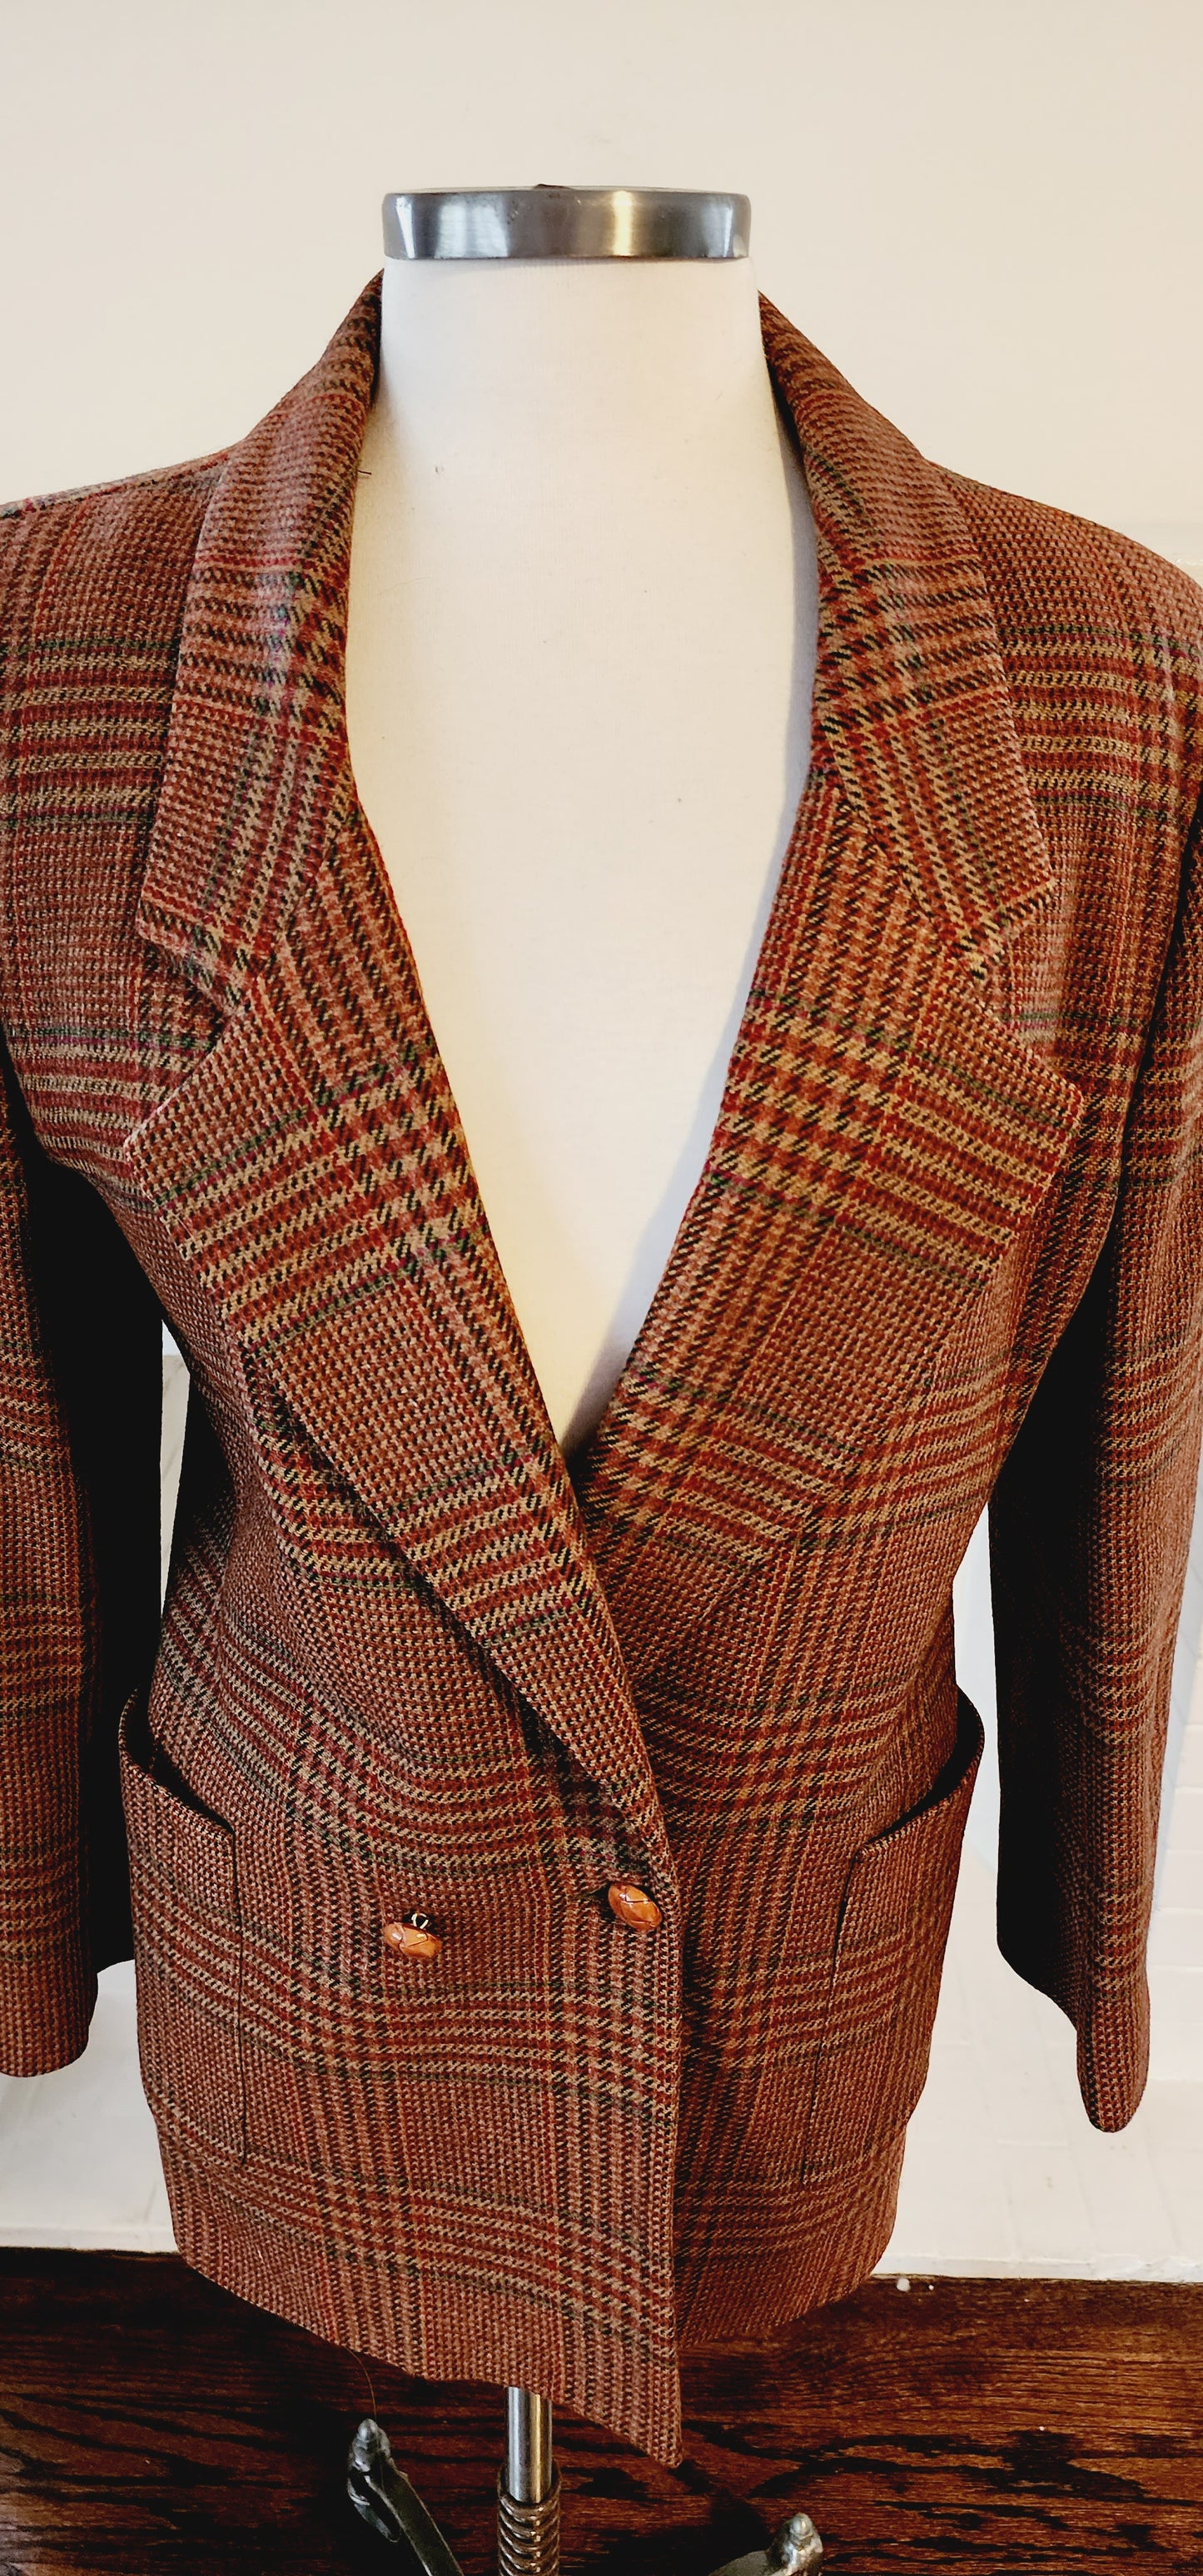 80s Wool Plaid Blazer in Brown Tones by Field Manor S/M